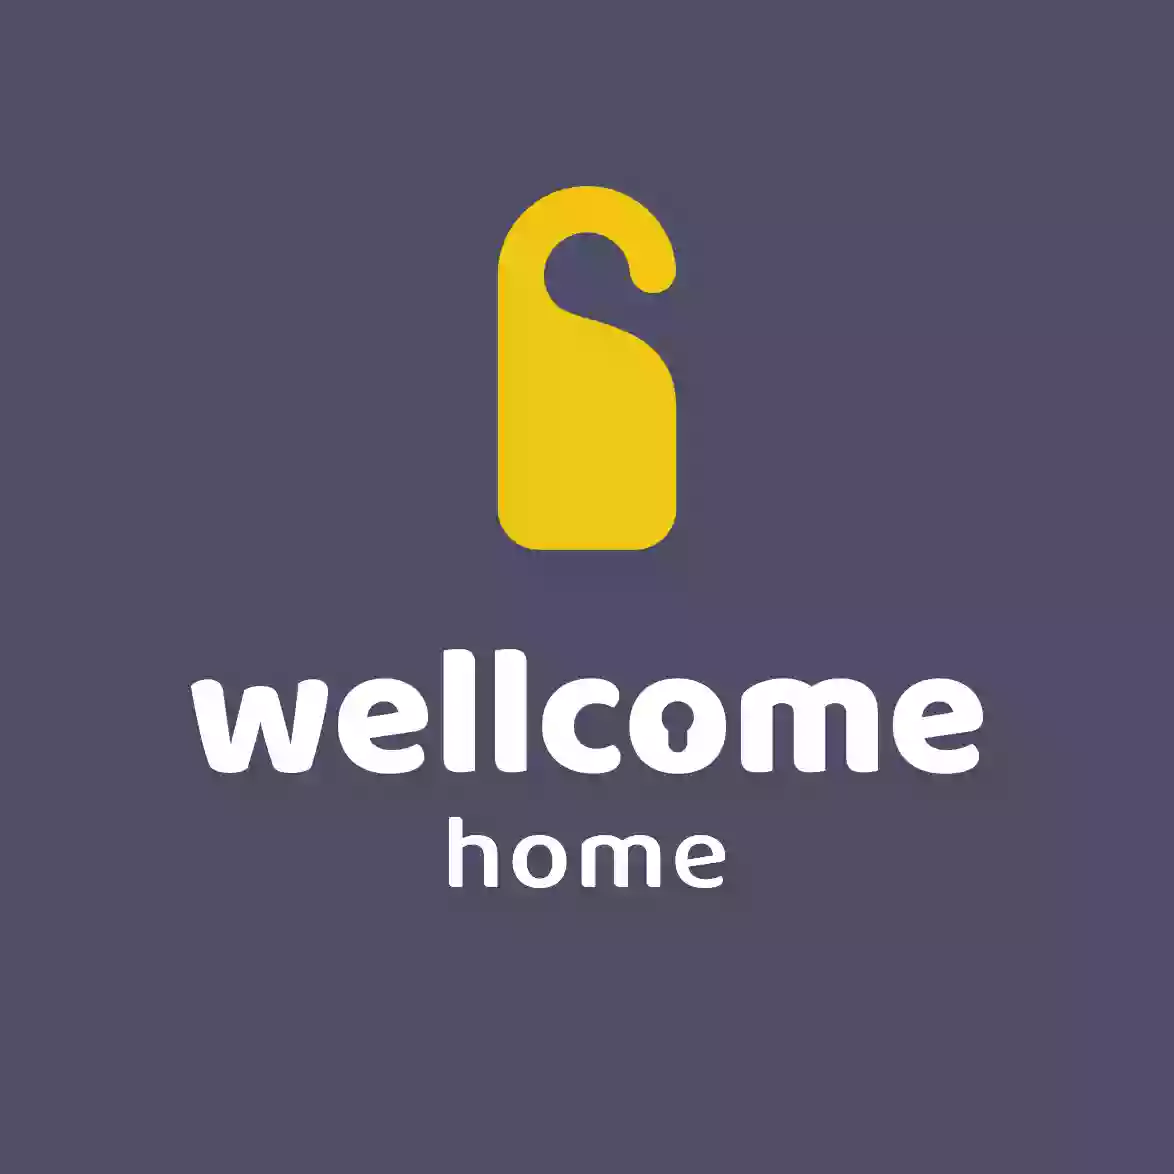 Wellcome Home